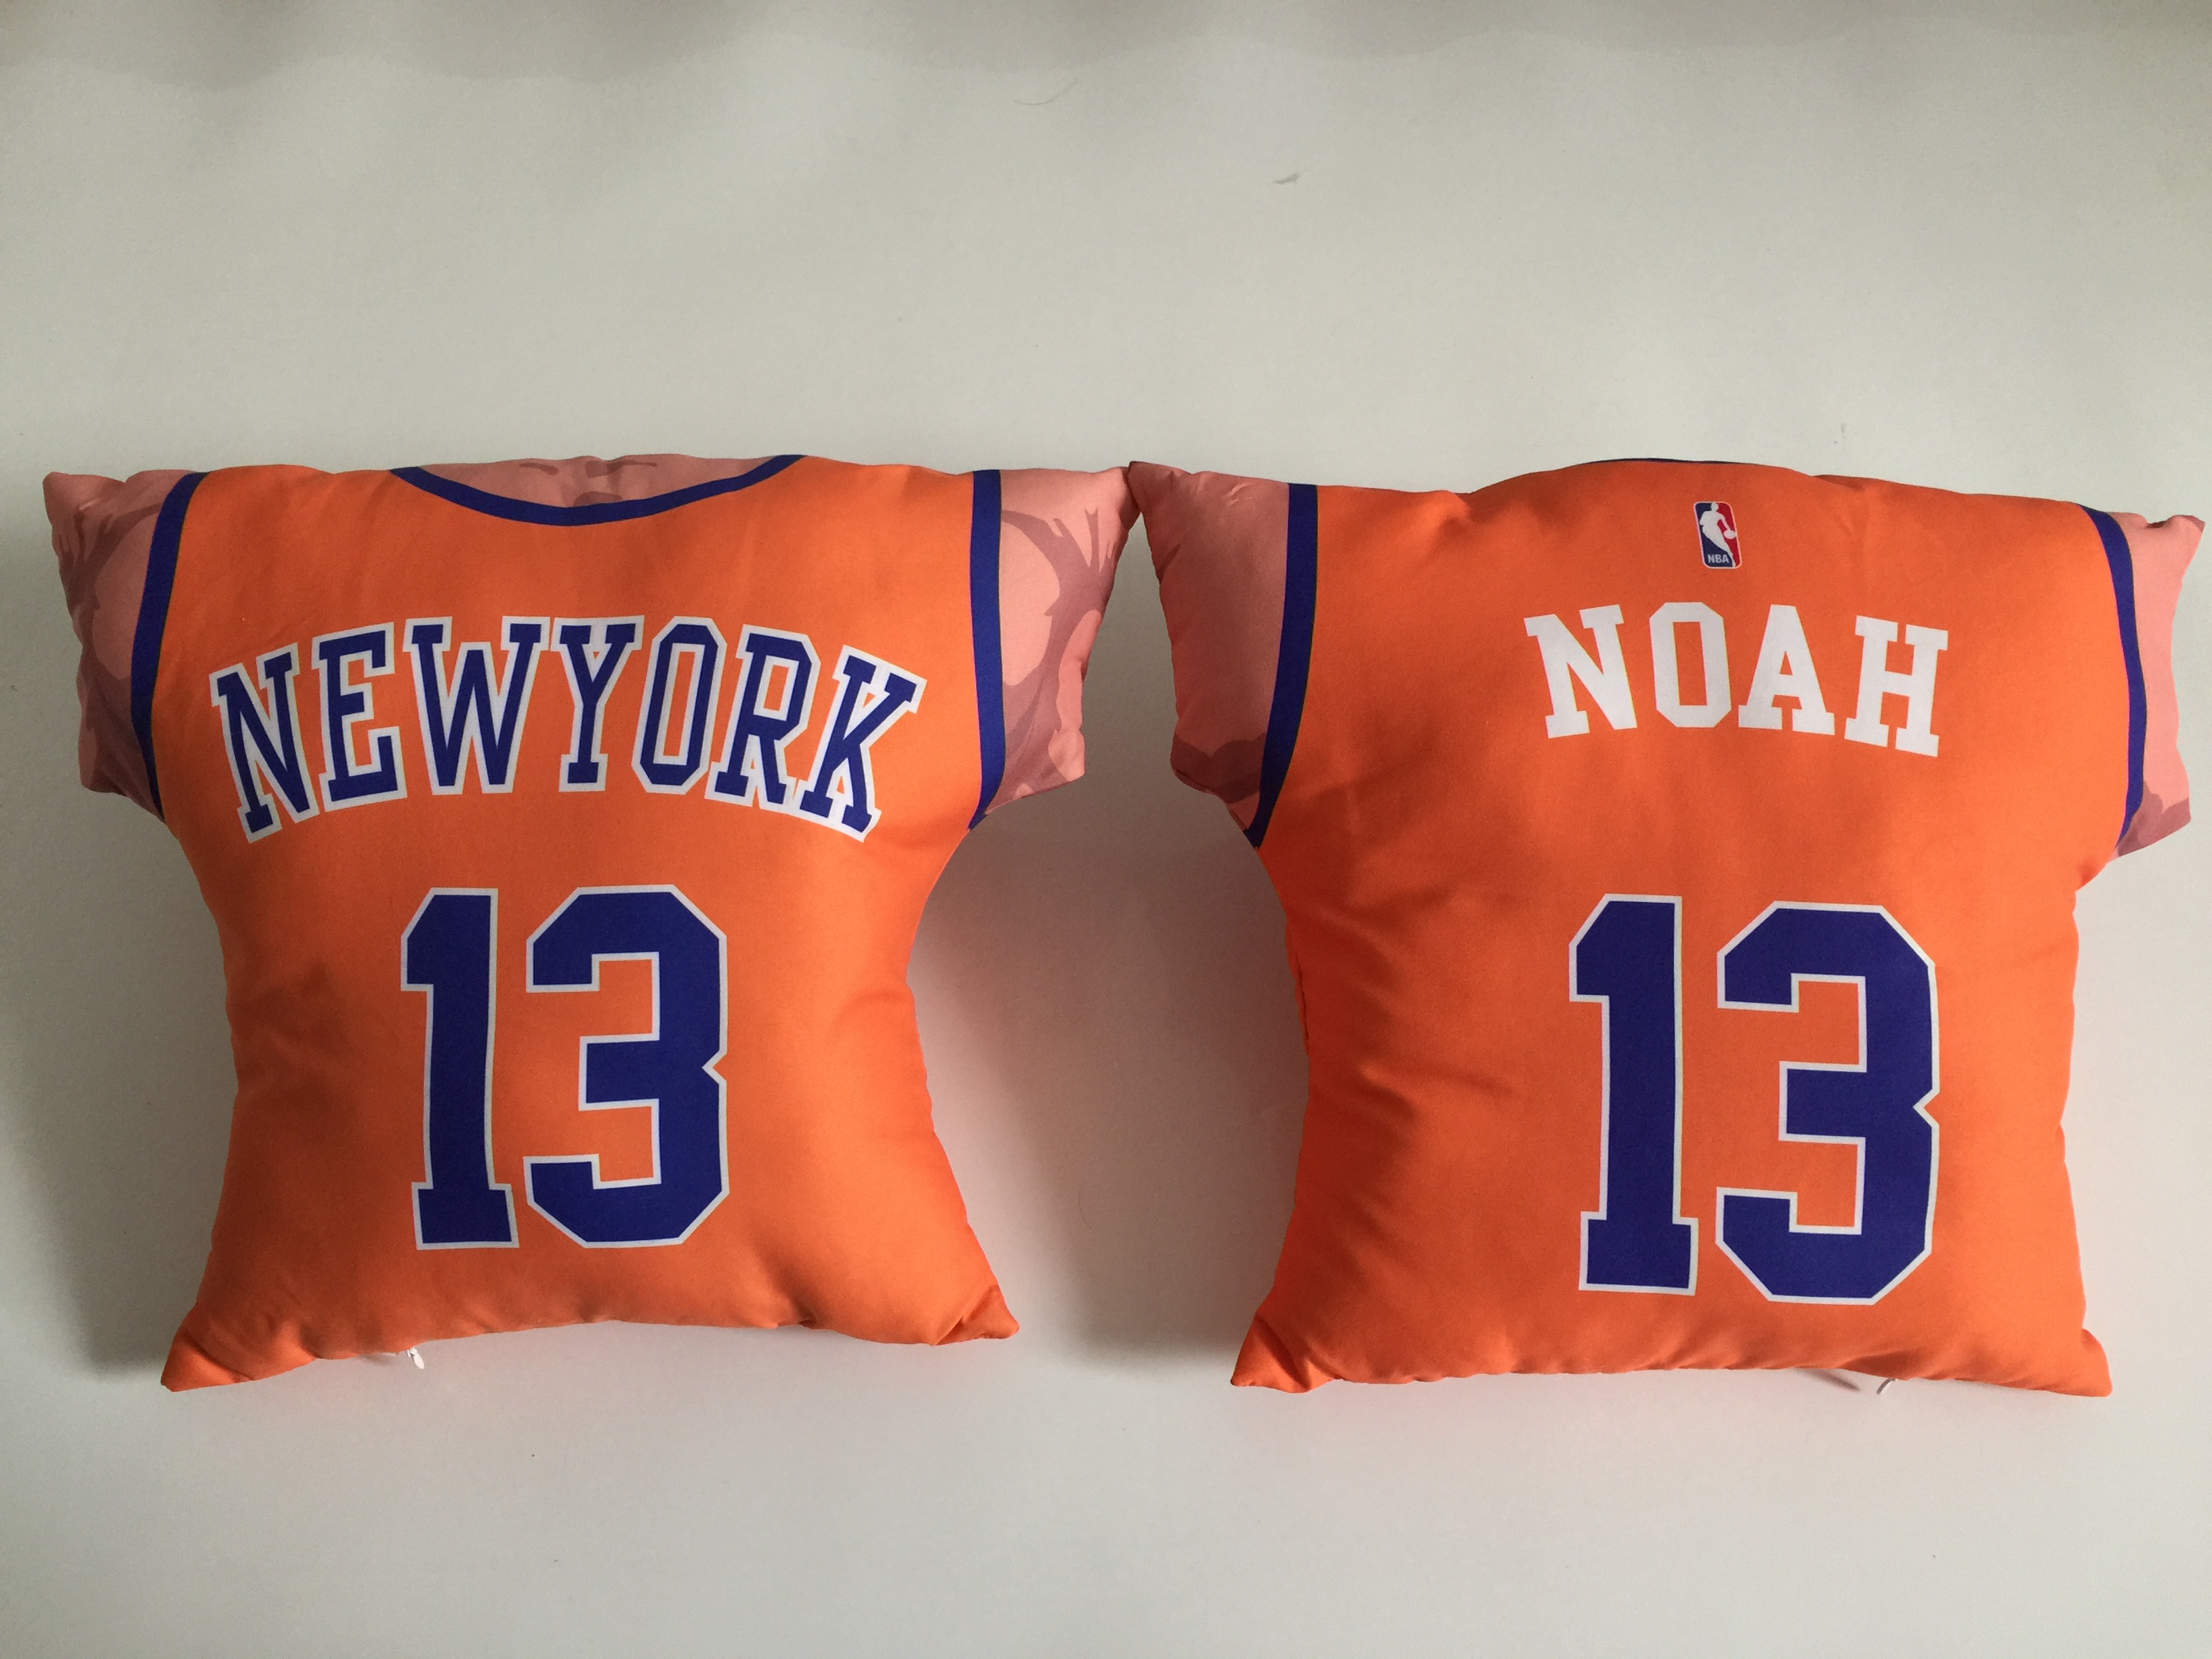 New York Knicks 13 Joakim Noah Orange NBA Pillow